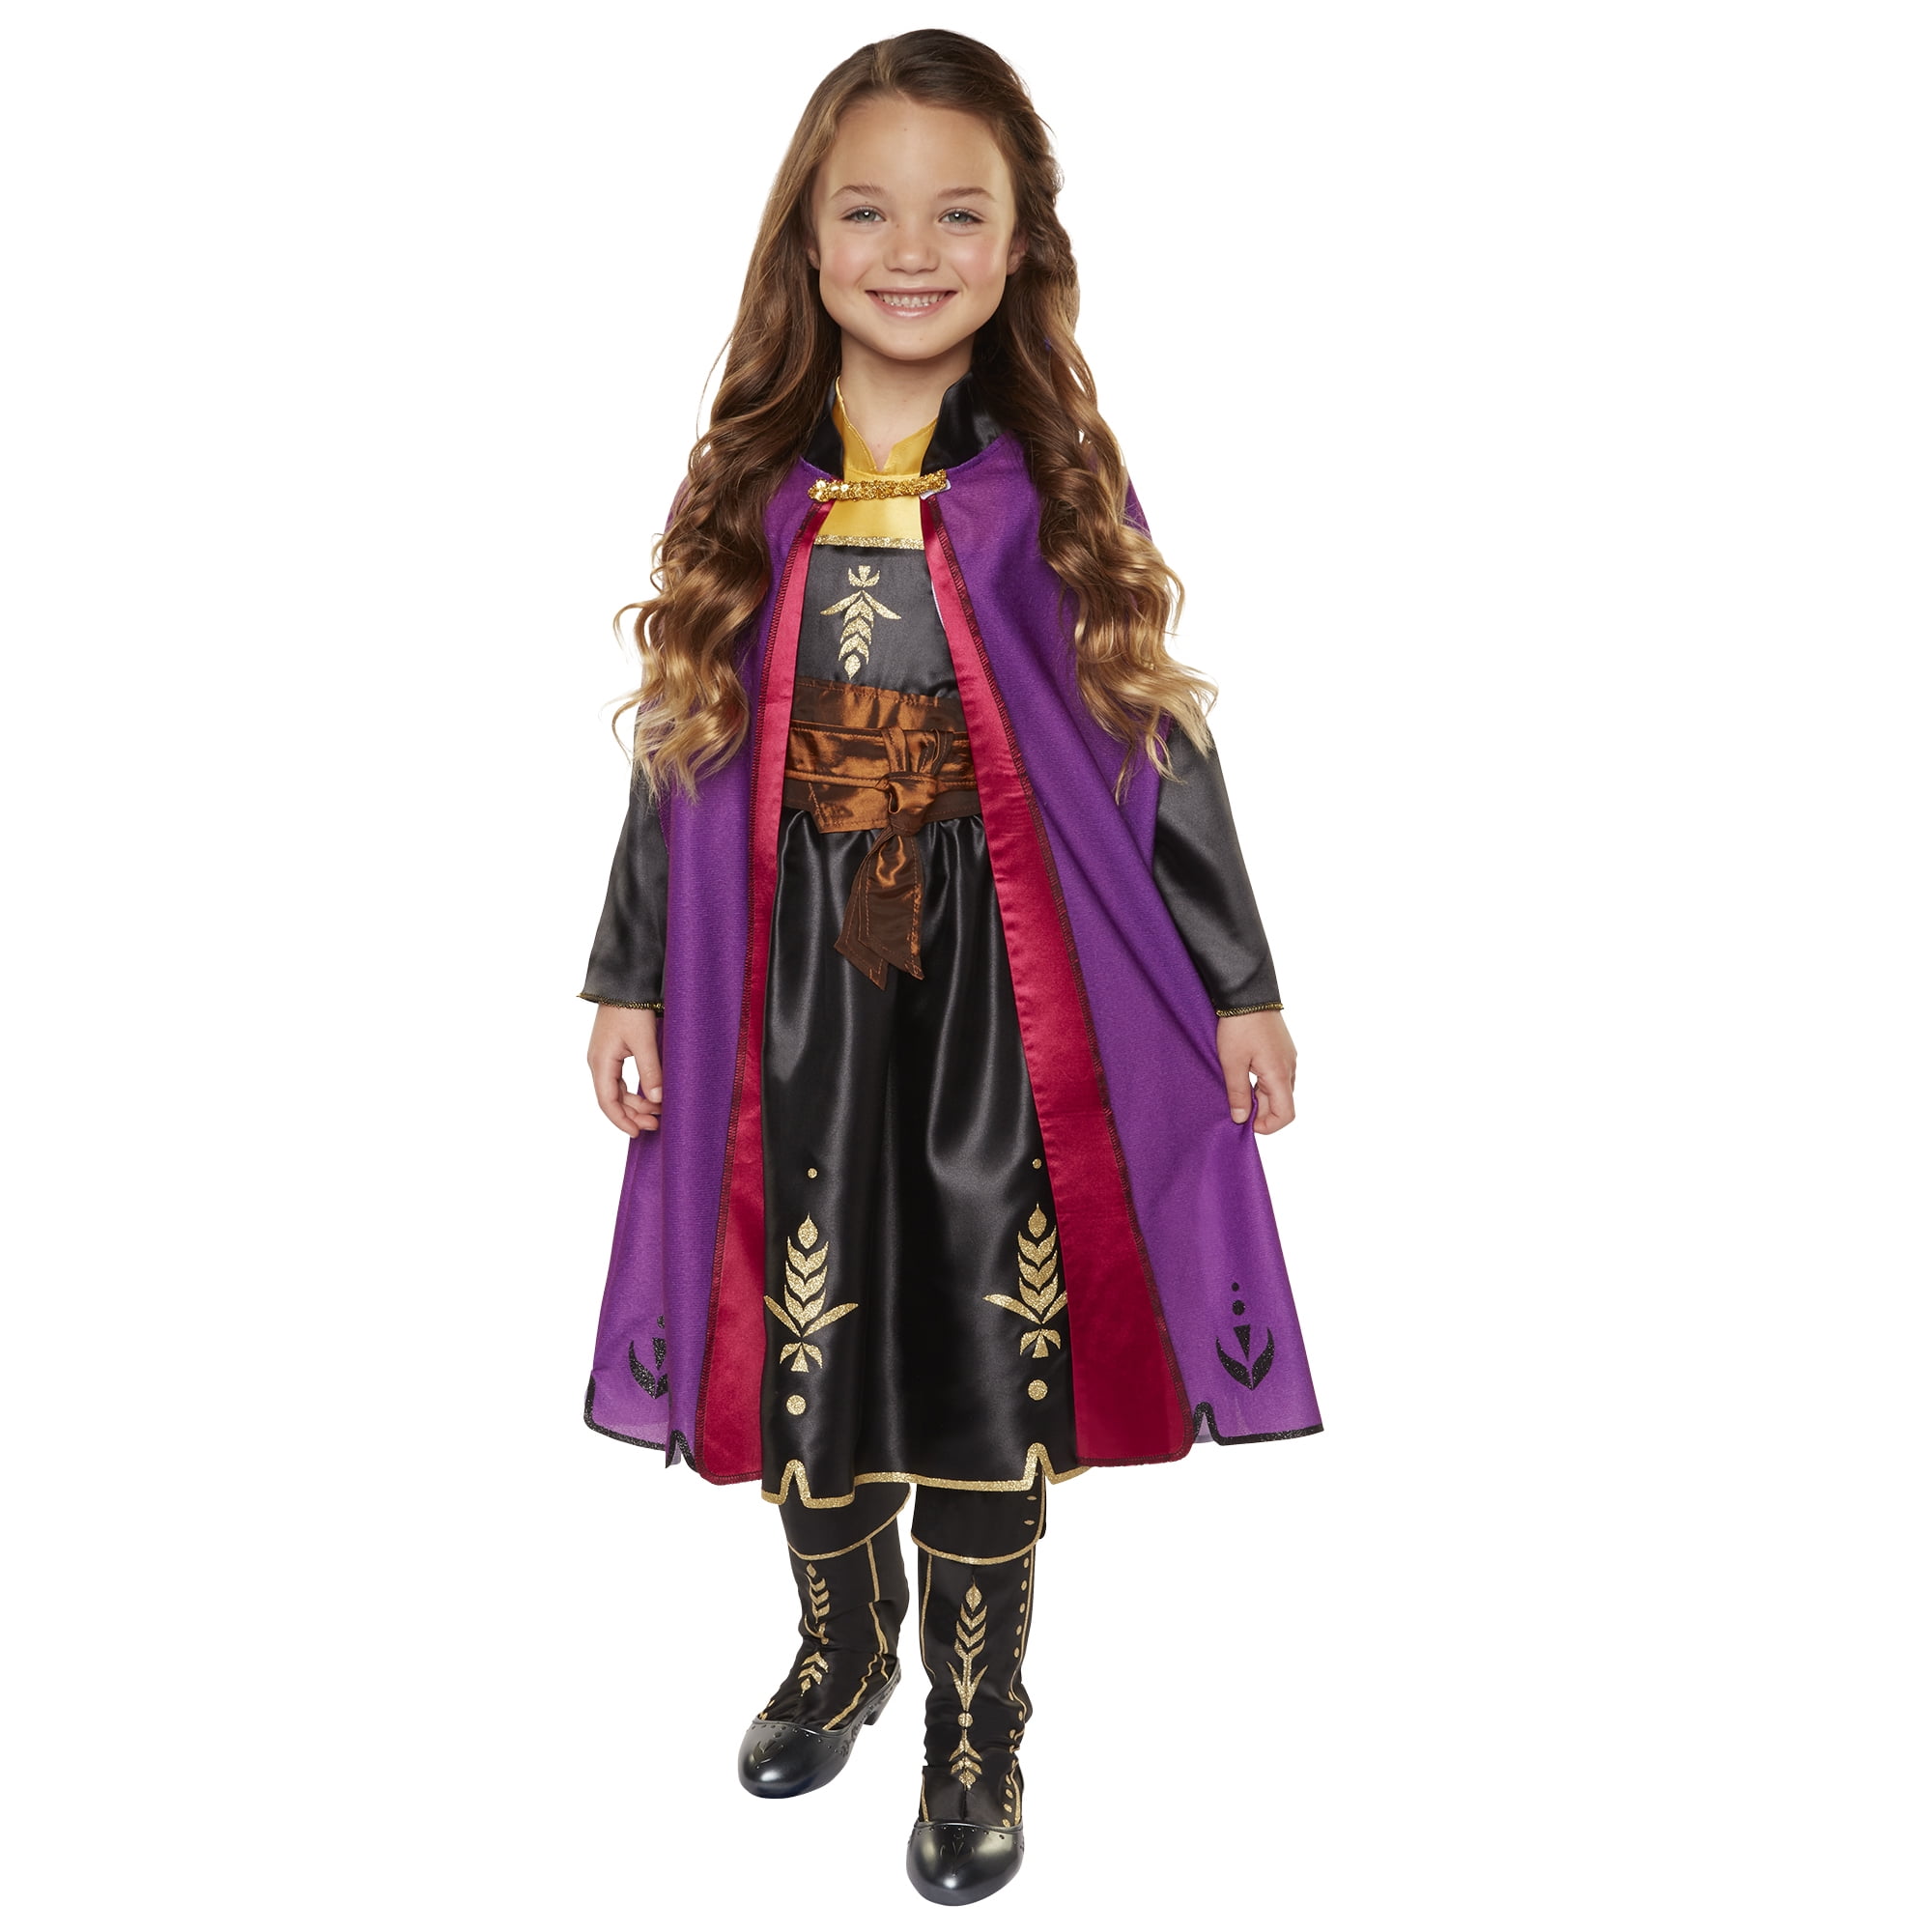 Napier paraguas Accesorios Frozen 2 Princess Anna Travel Girl's Everyday Fancy-Dress Costume, S (4-6)  - Walmart.com